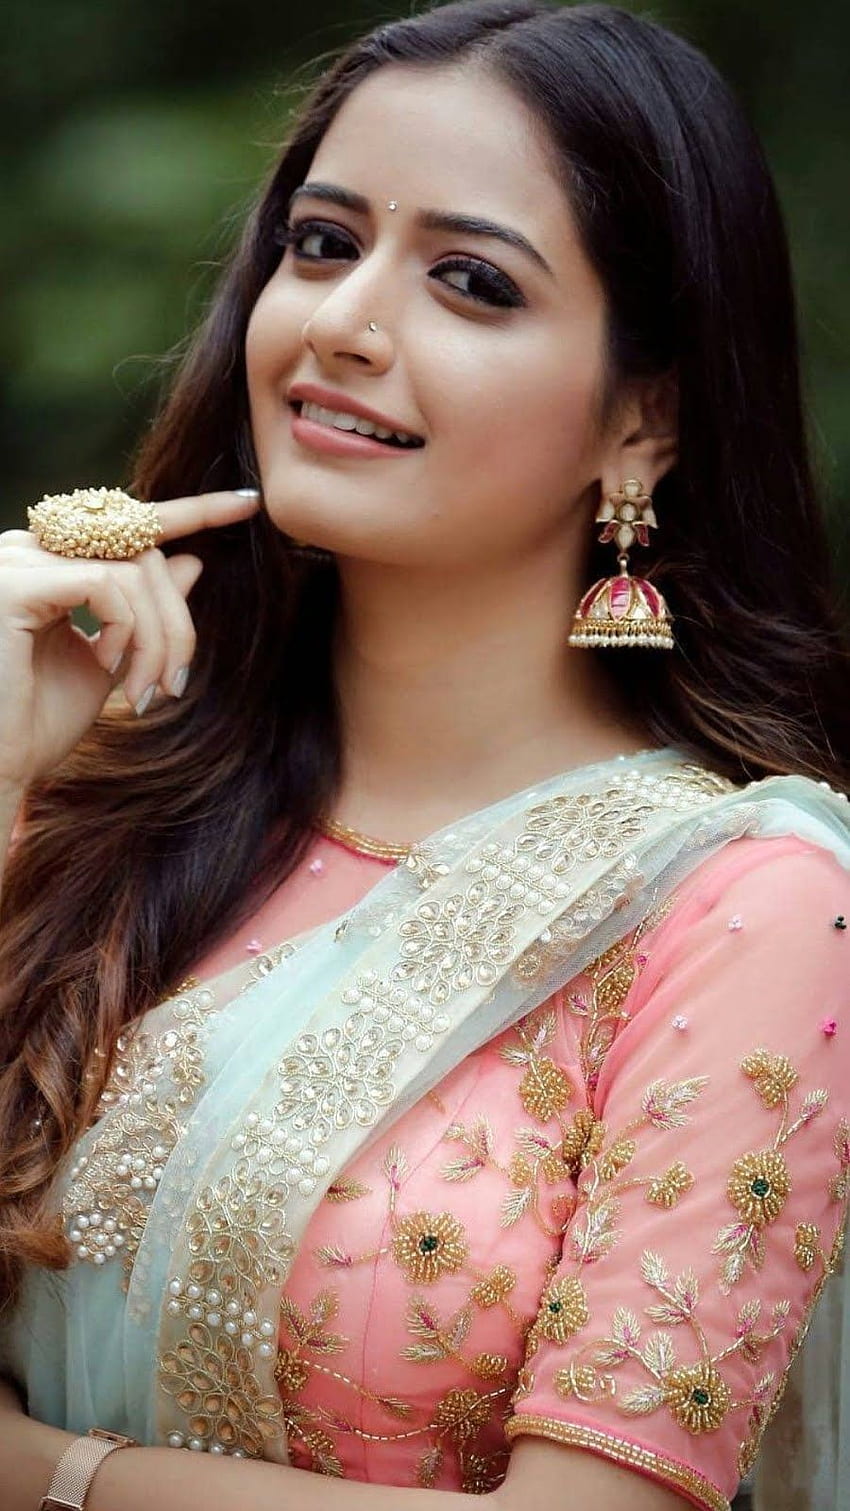 Gadis bergaya, Ashika Ranganath wallpaper ponsel HD